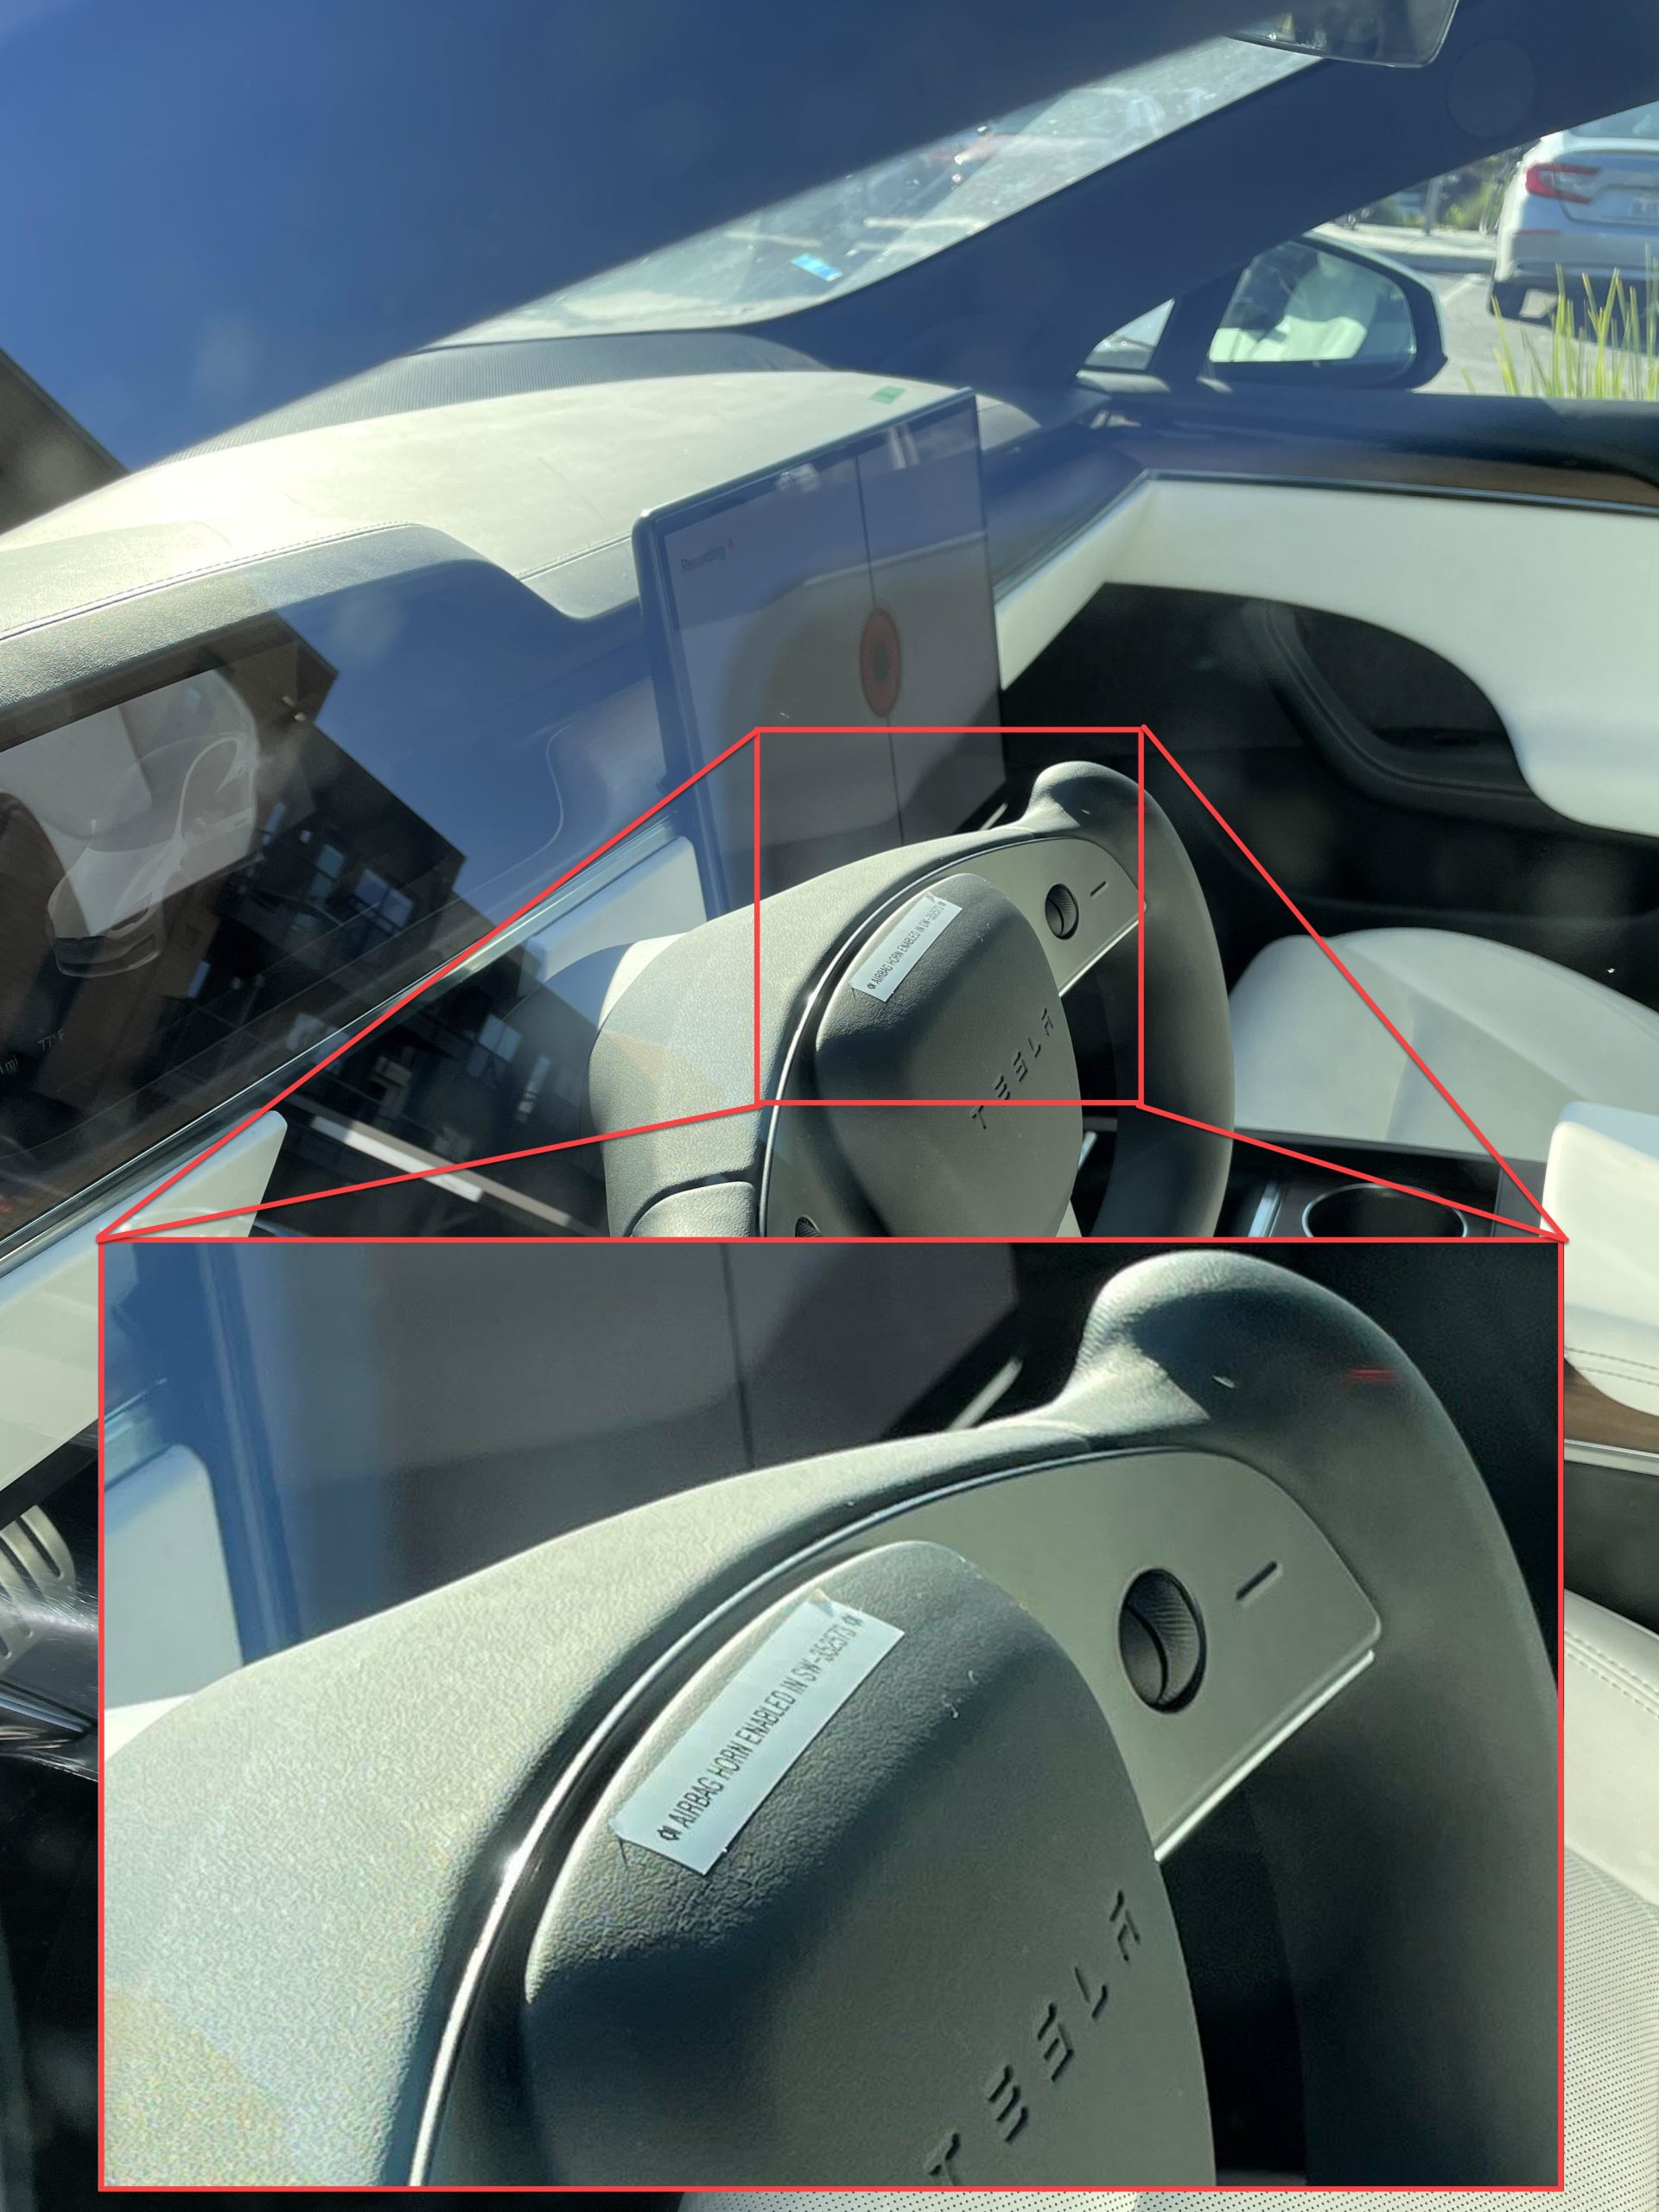 airbag horn sticker up close